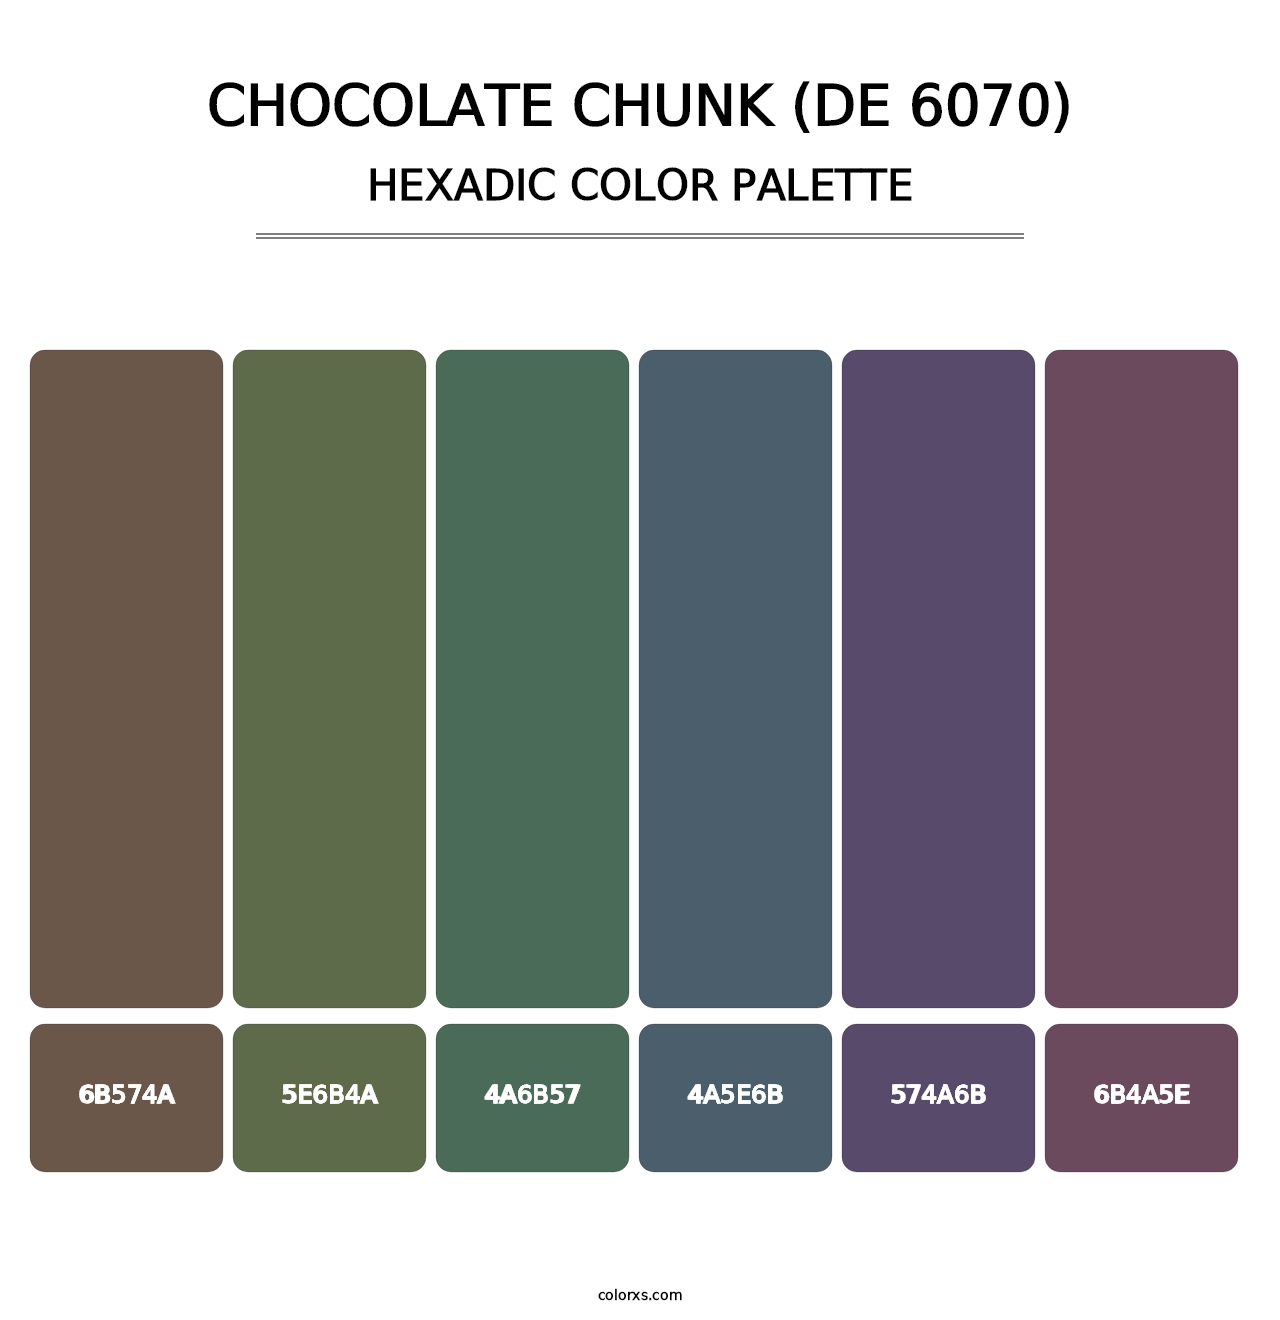 Chocolate Chunk (DE 6070) - Hexadic Color Palette